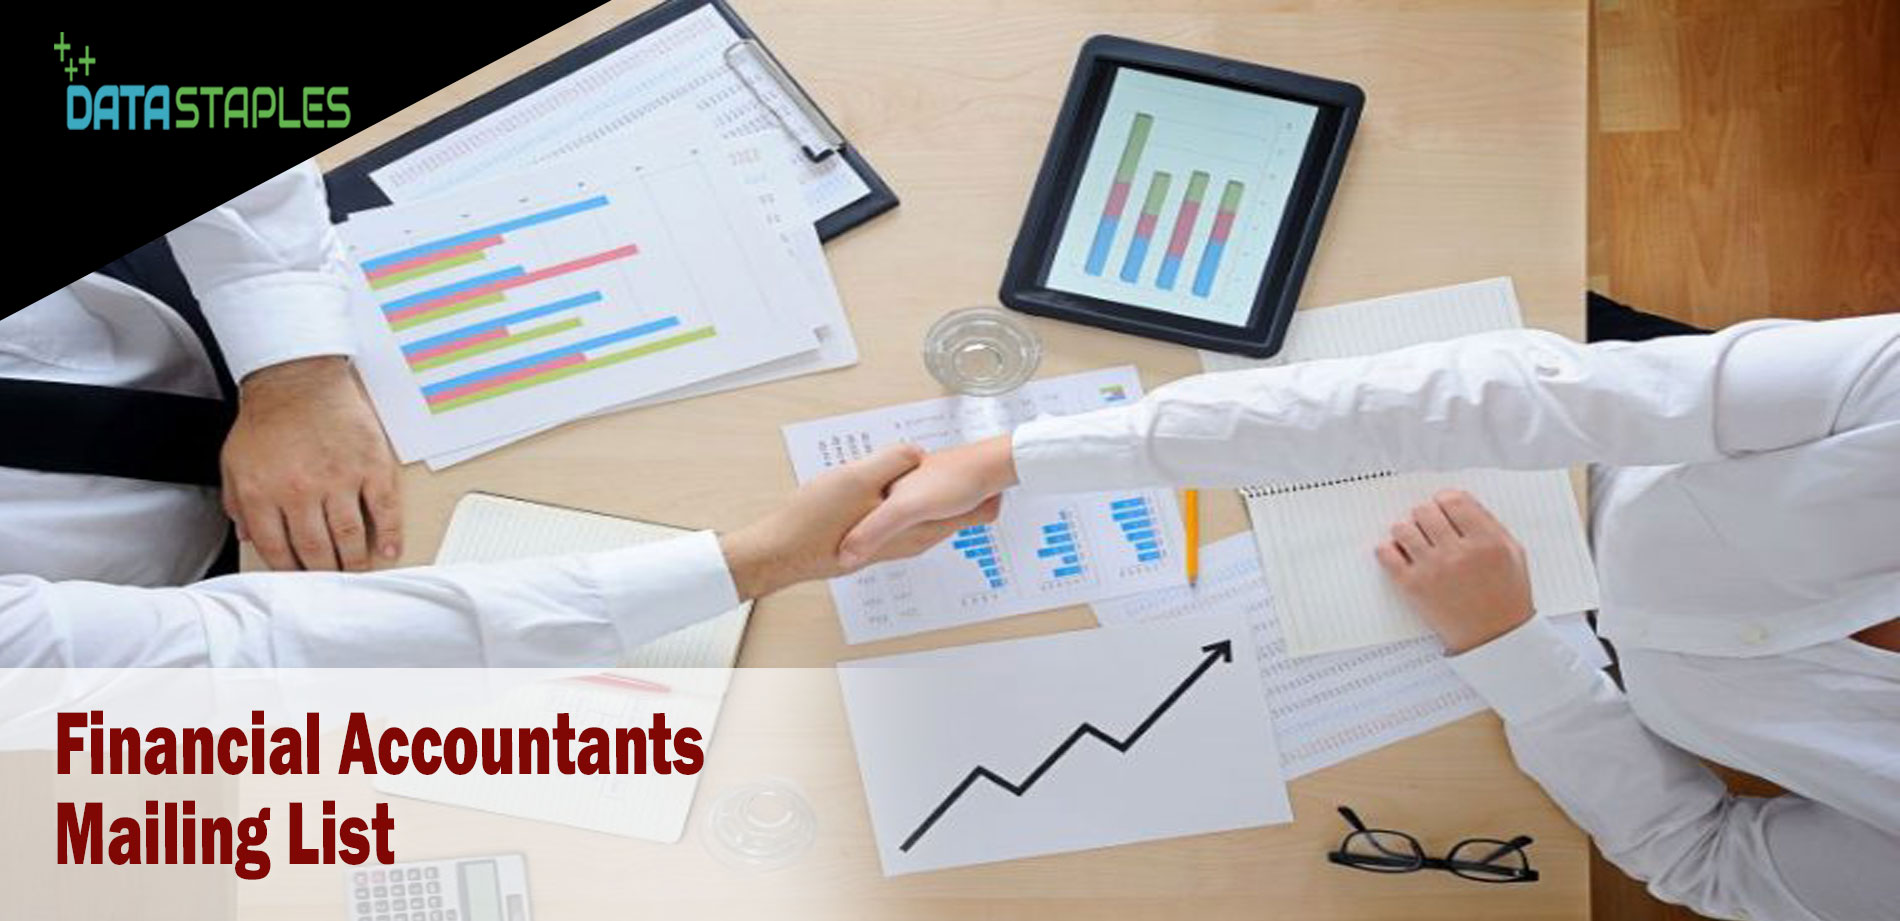 Financial Accountants Mailing List | DataStaples